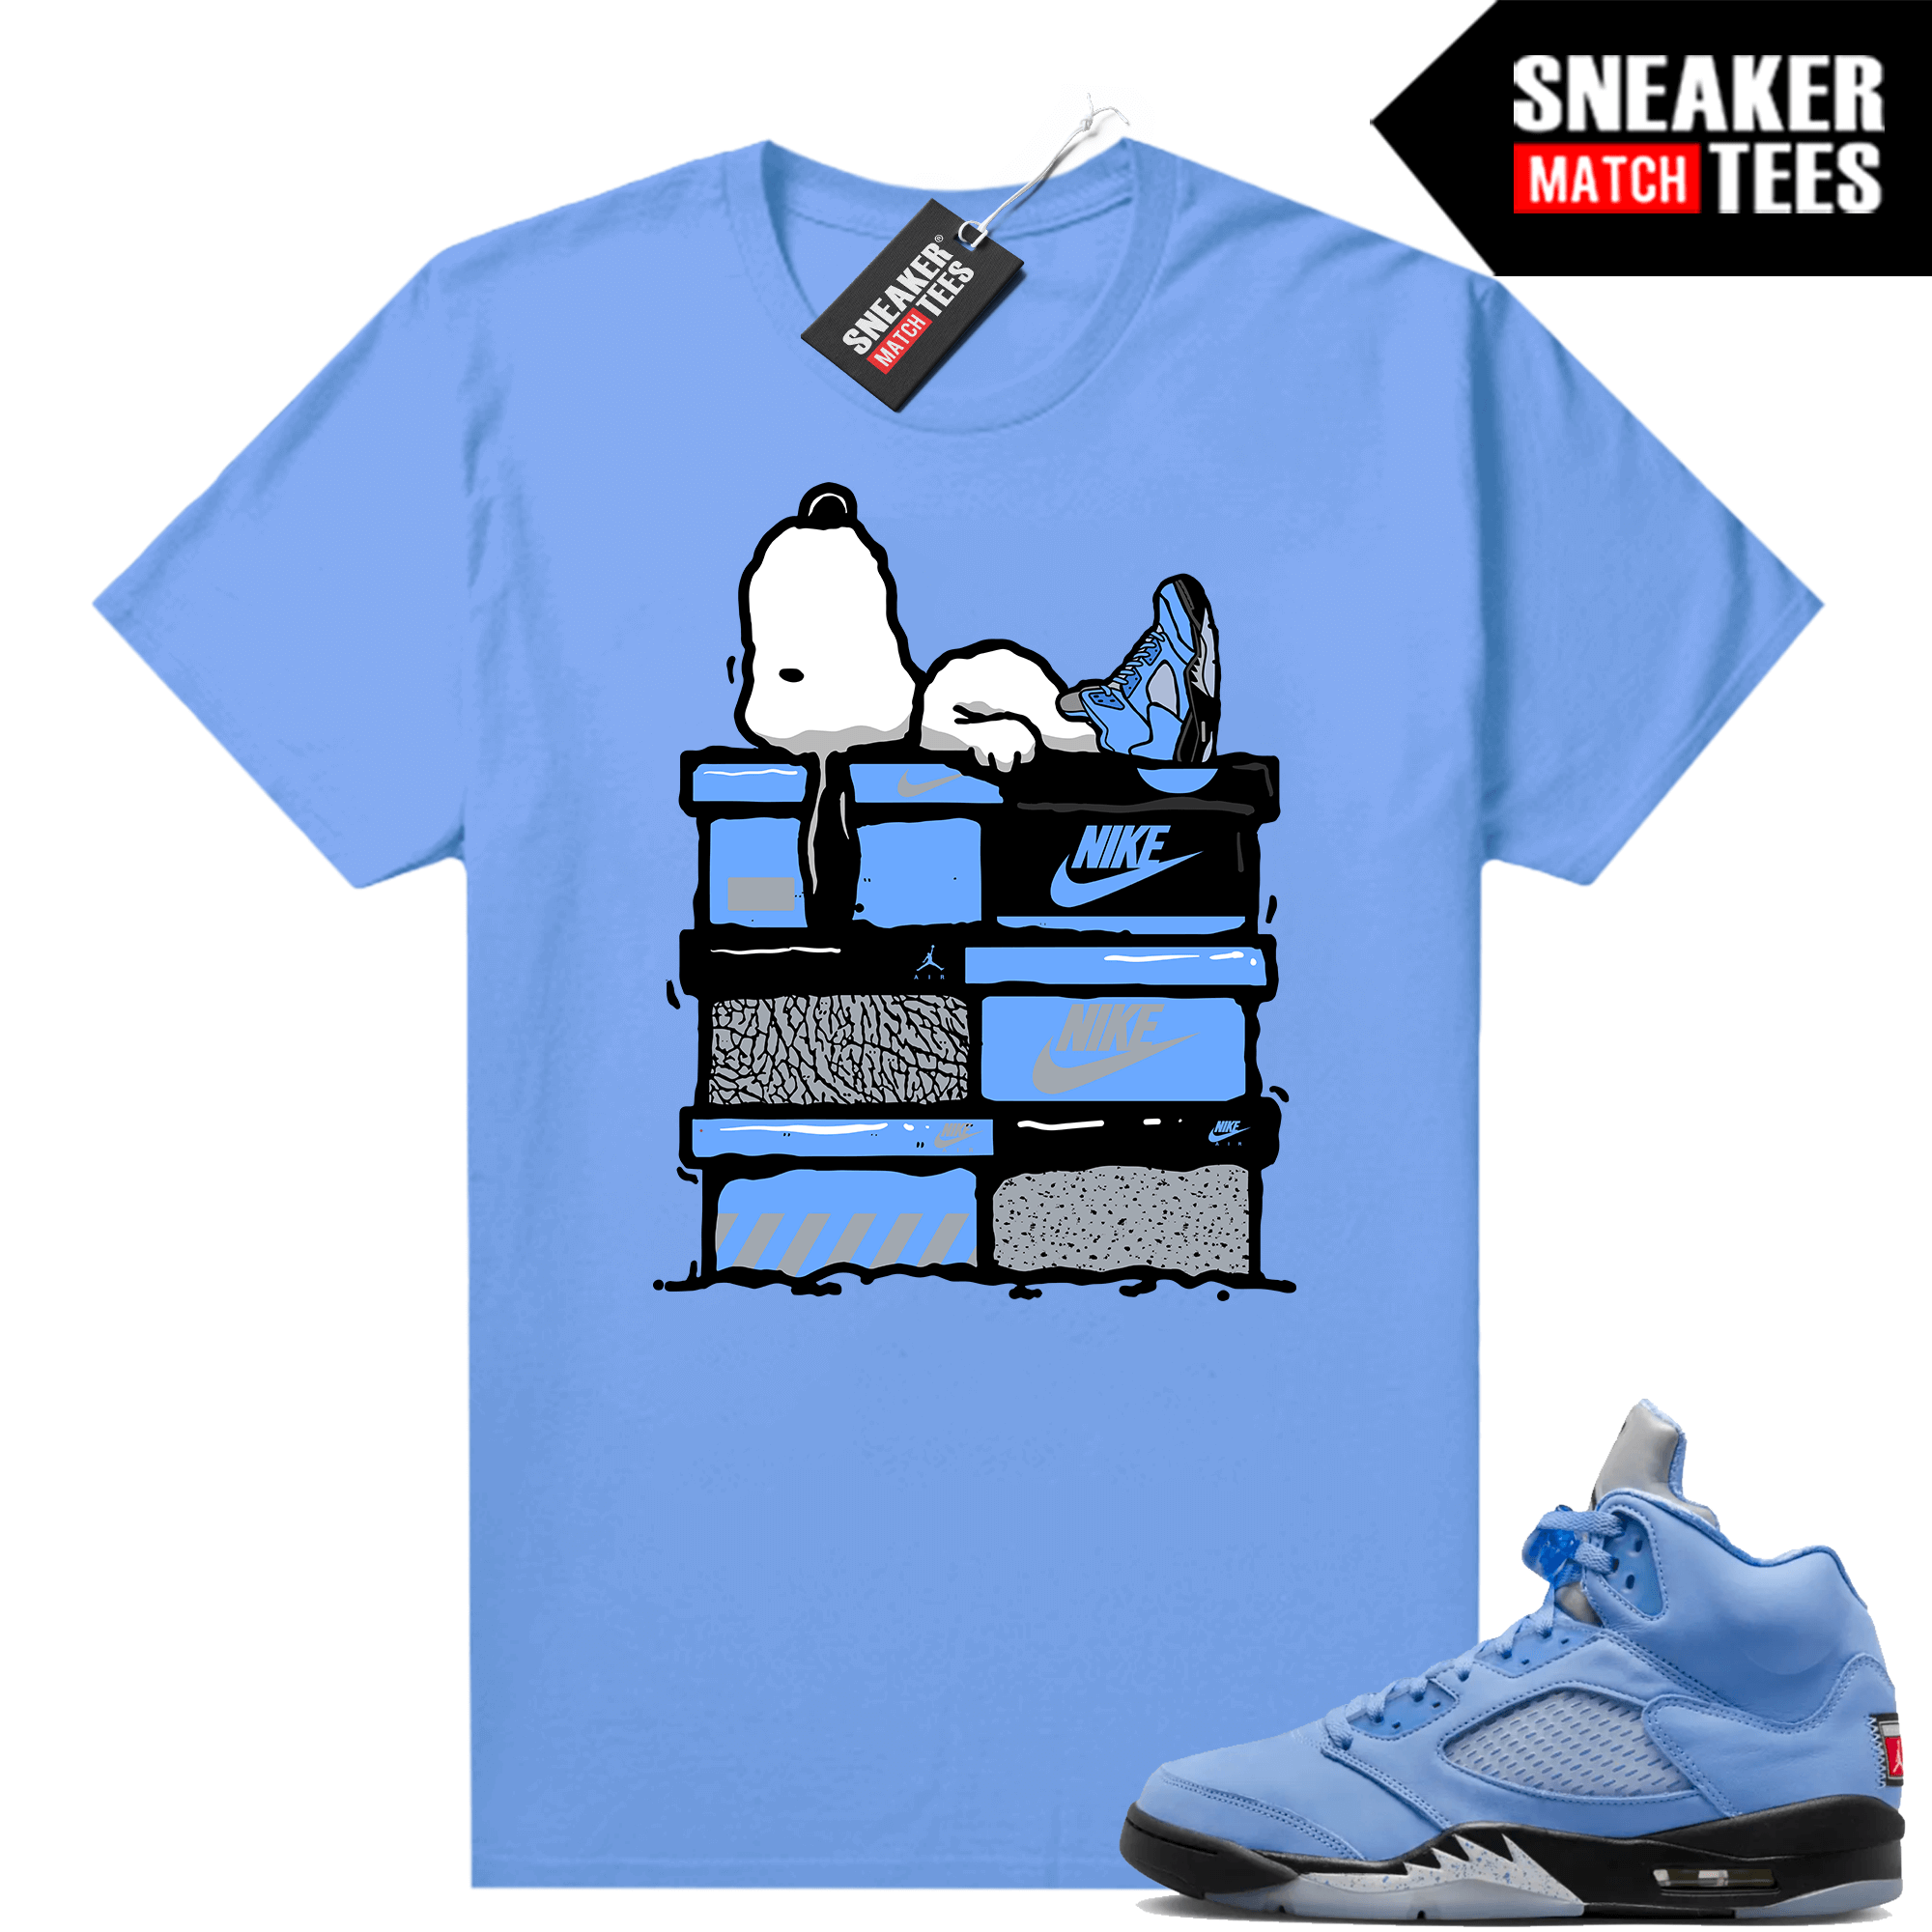 Jordan 3 'Slam Dunk' Detailed Look shirts Runtrendy Sneaker Match University Blue Sneakerhead Snoopy